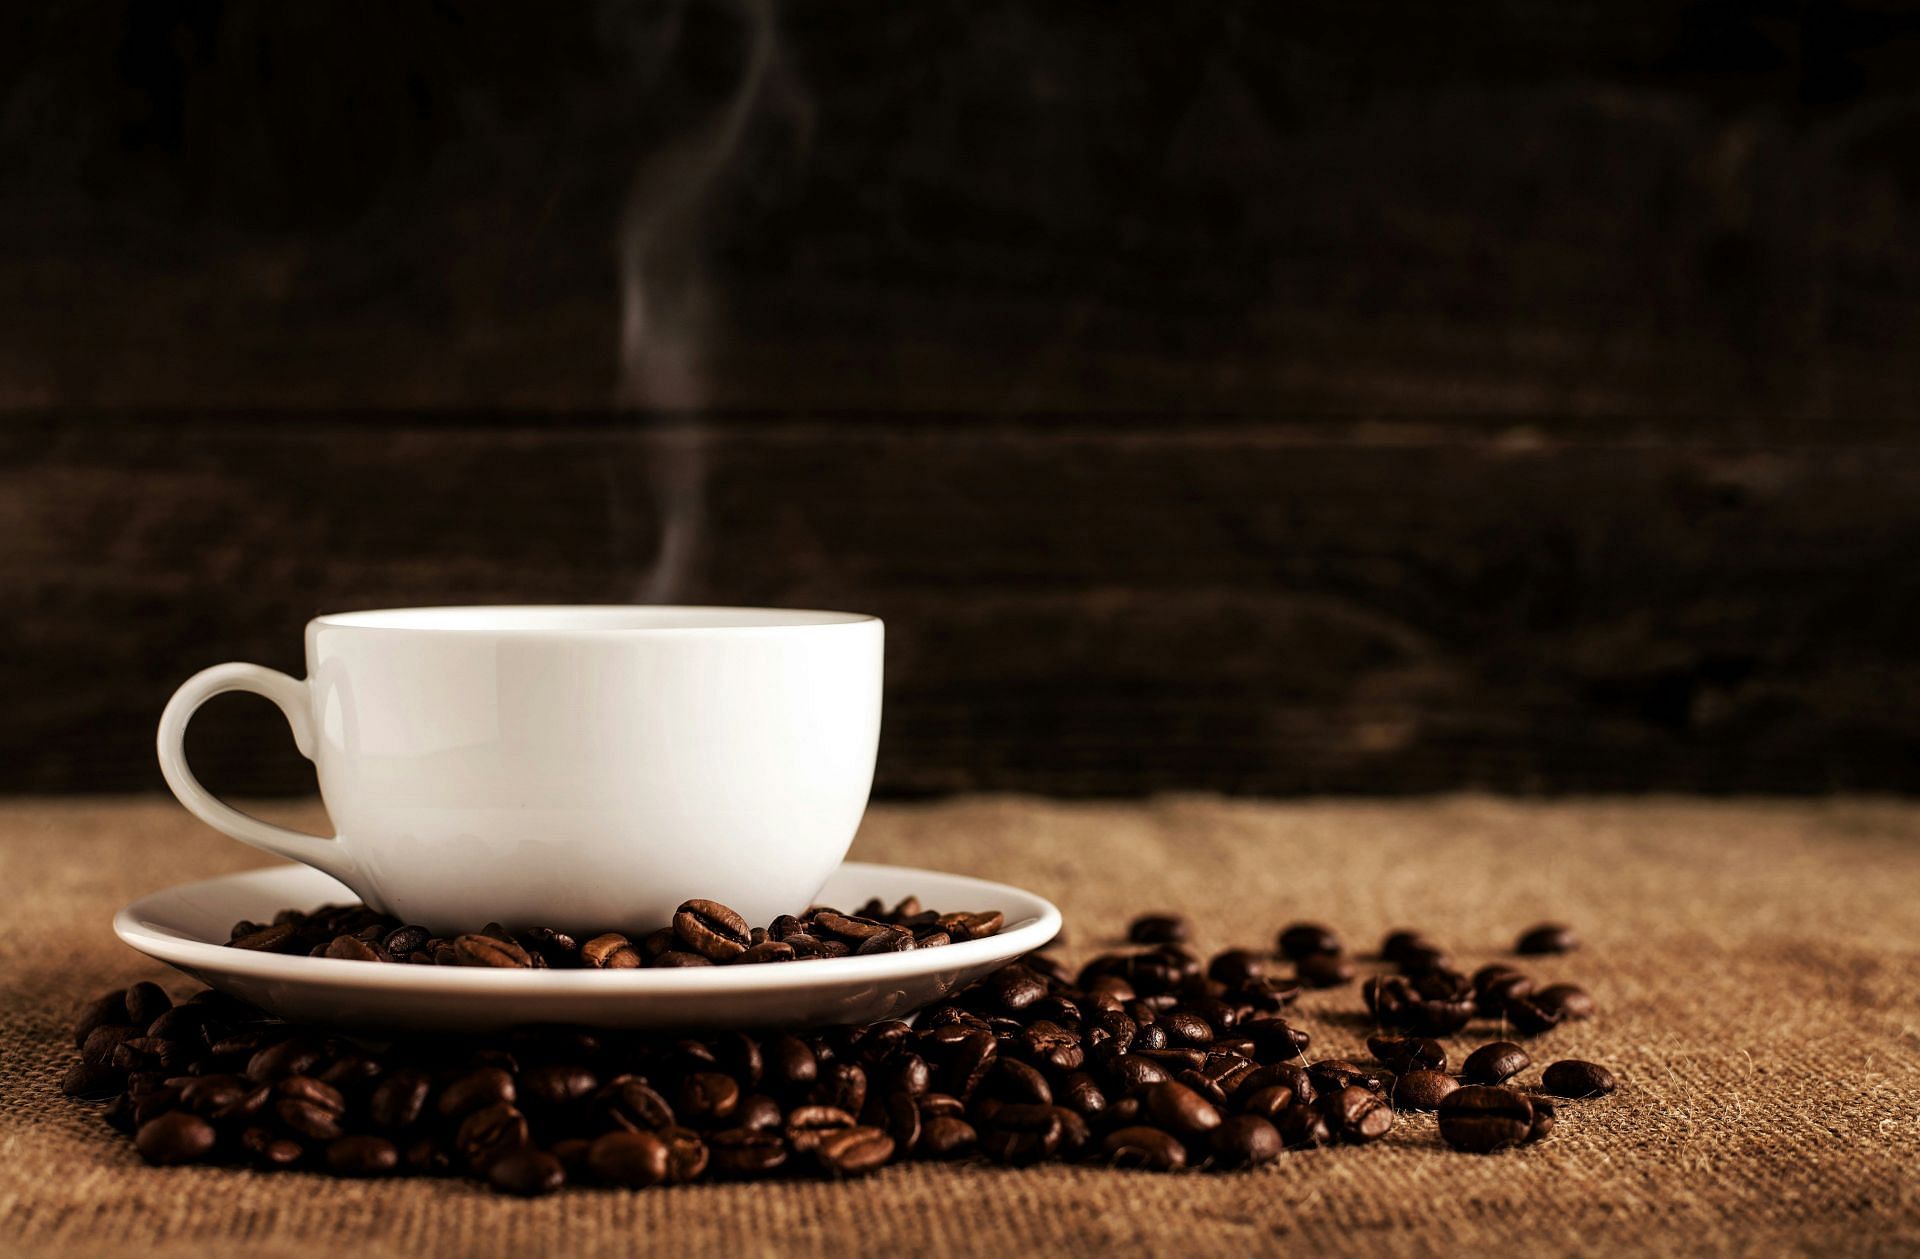 Wondering how to increase REM sleep? Drink coffee wisely (Image by Mike Kenneally/Unsplash)